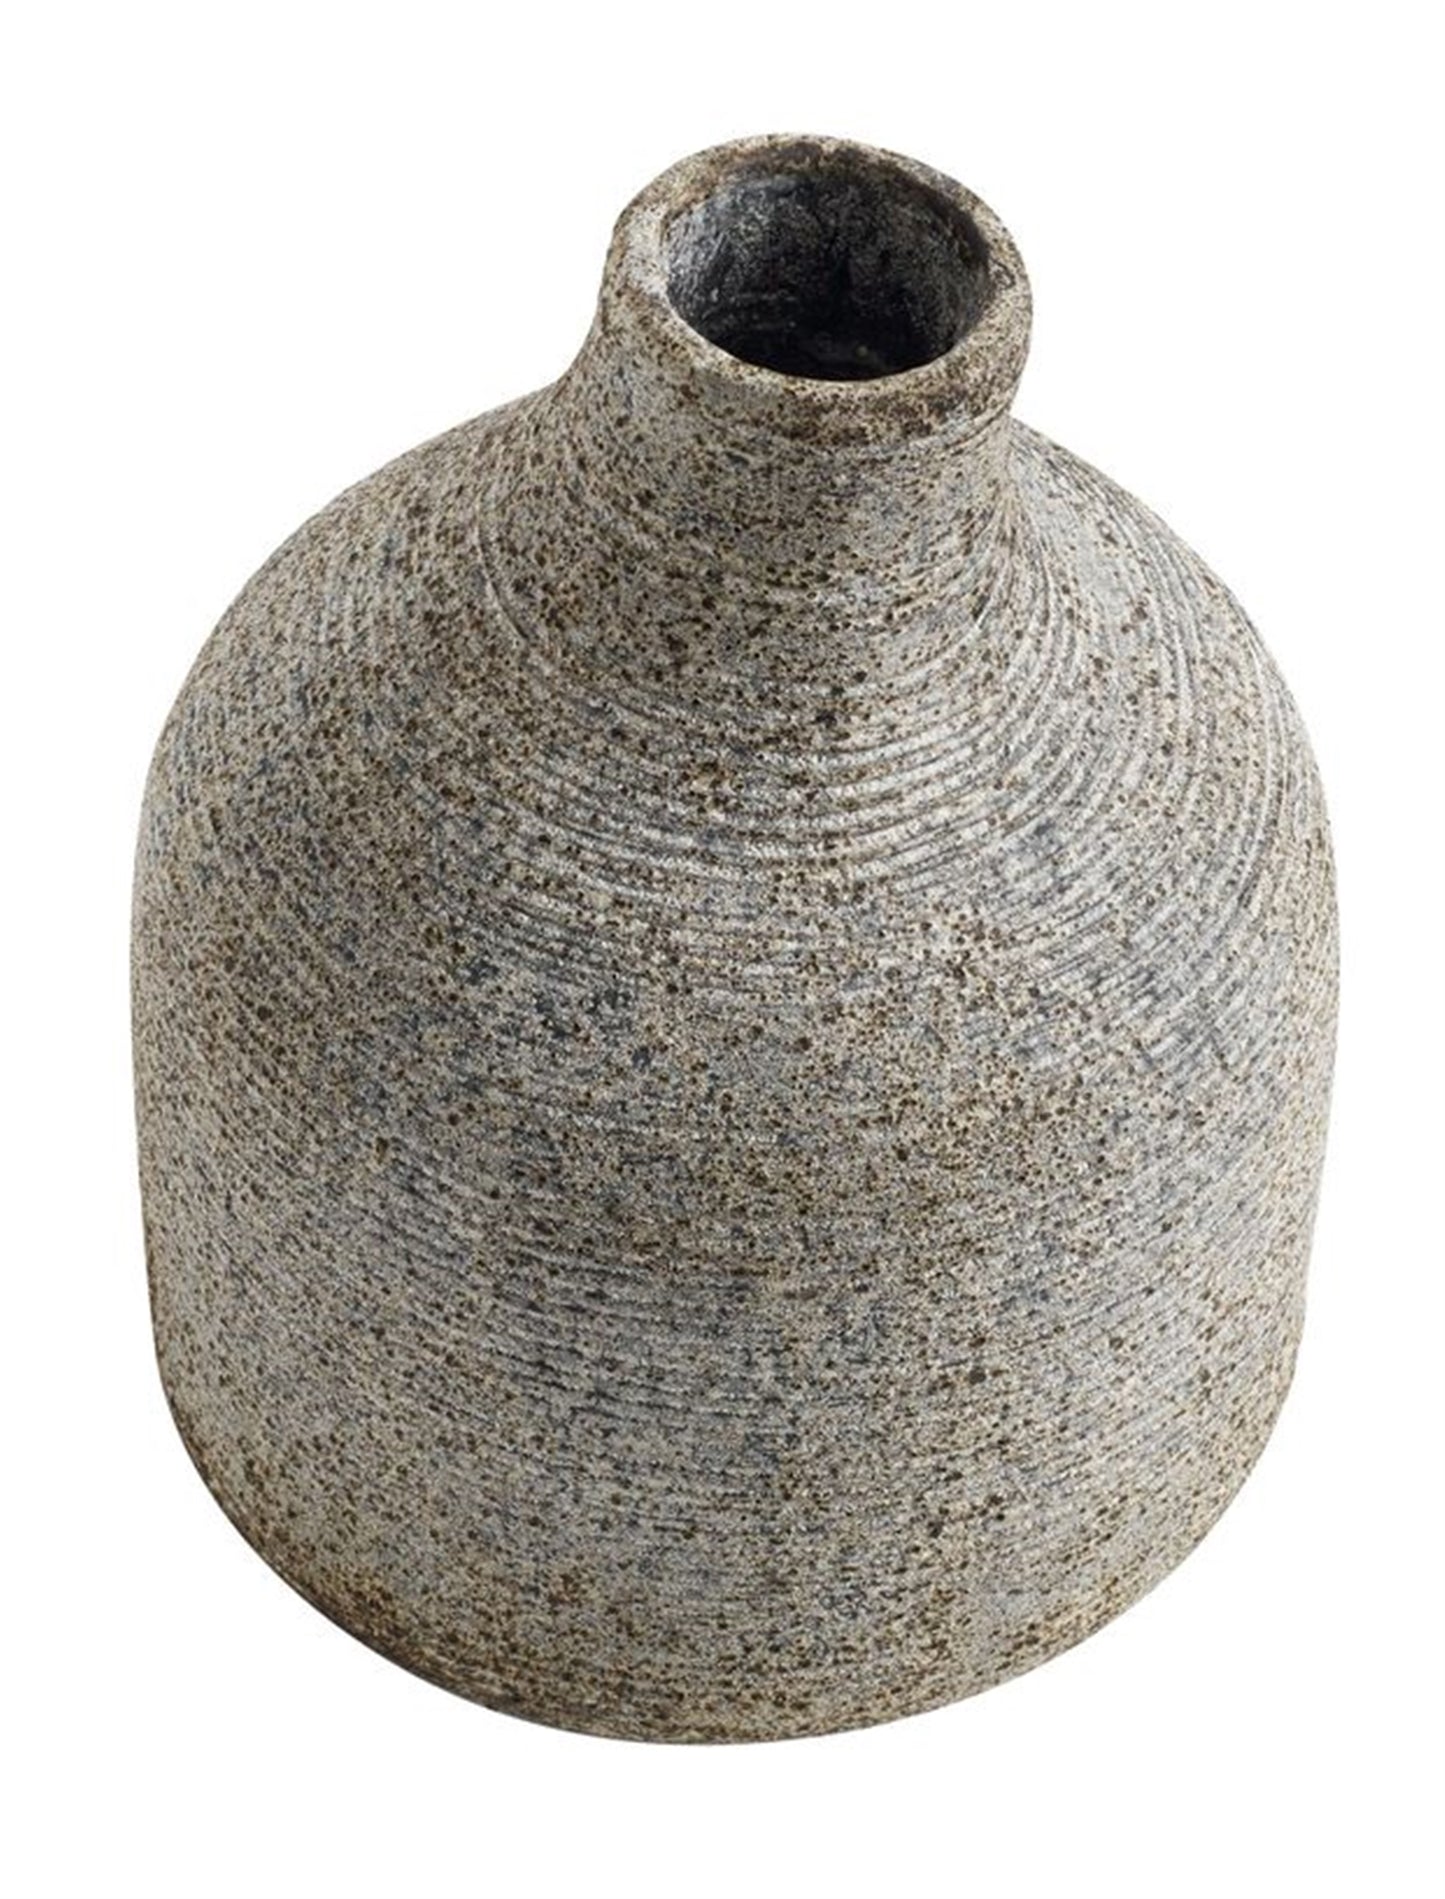 Ridged Vase in Grey/Brown - Small